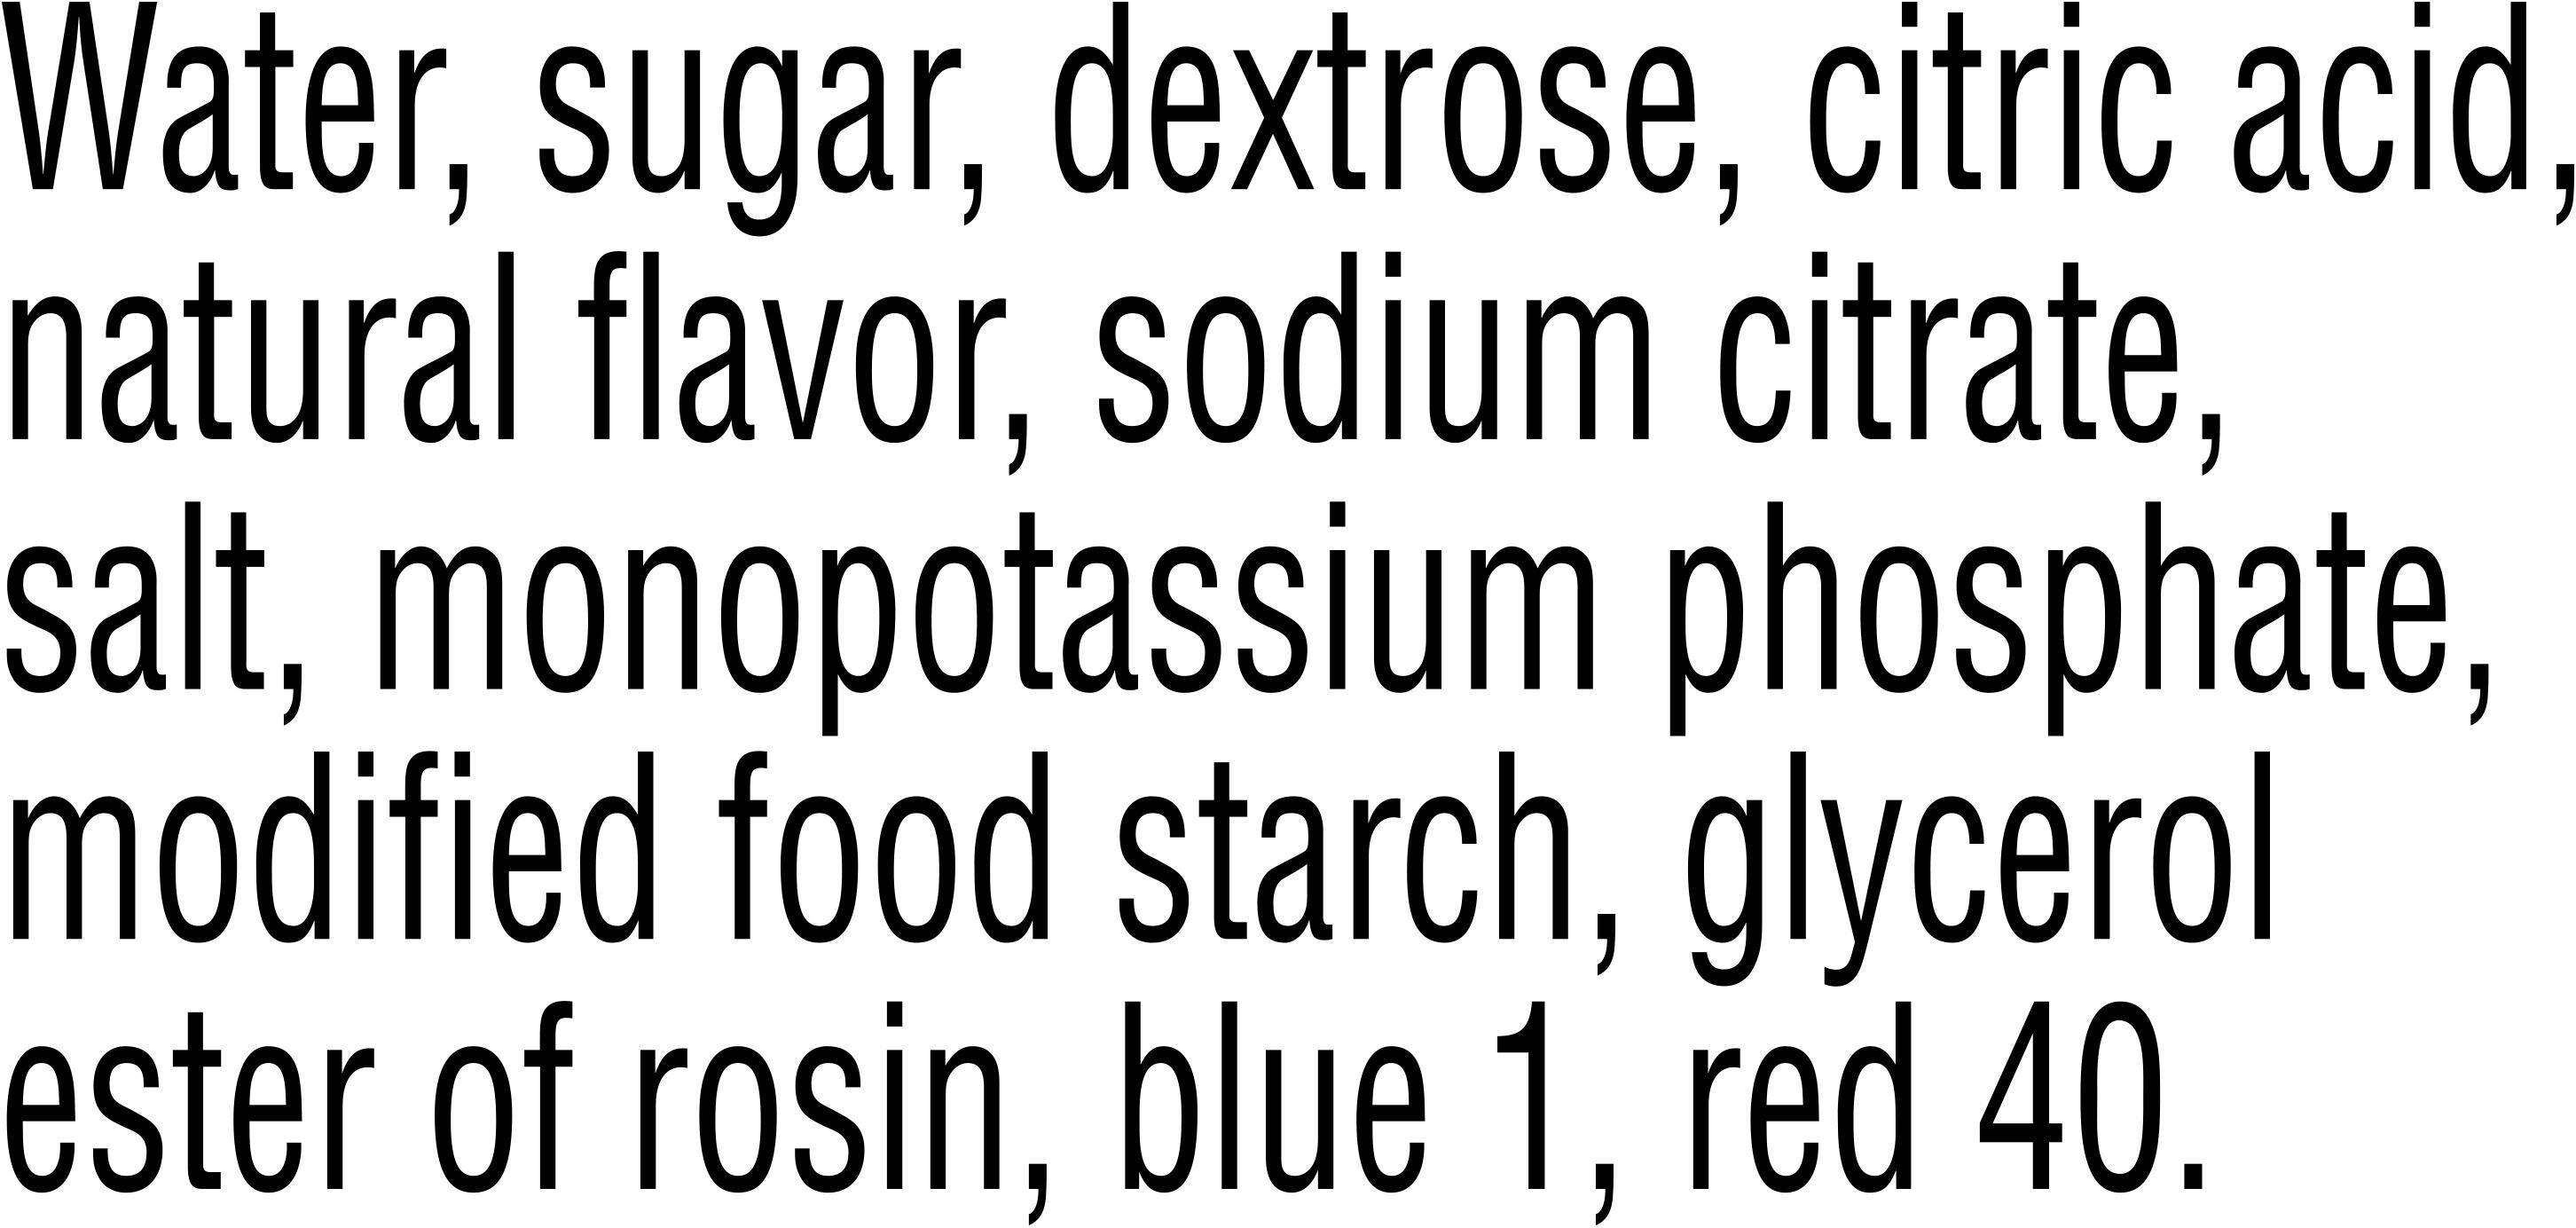 Image describing nutrition information for product Gatorade Fierce Grape